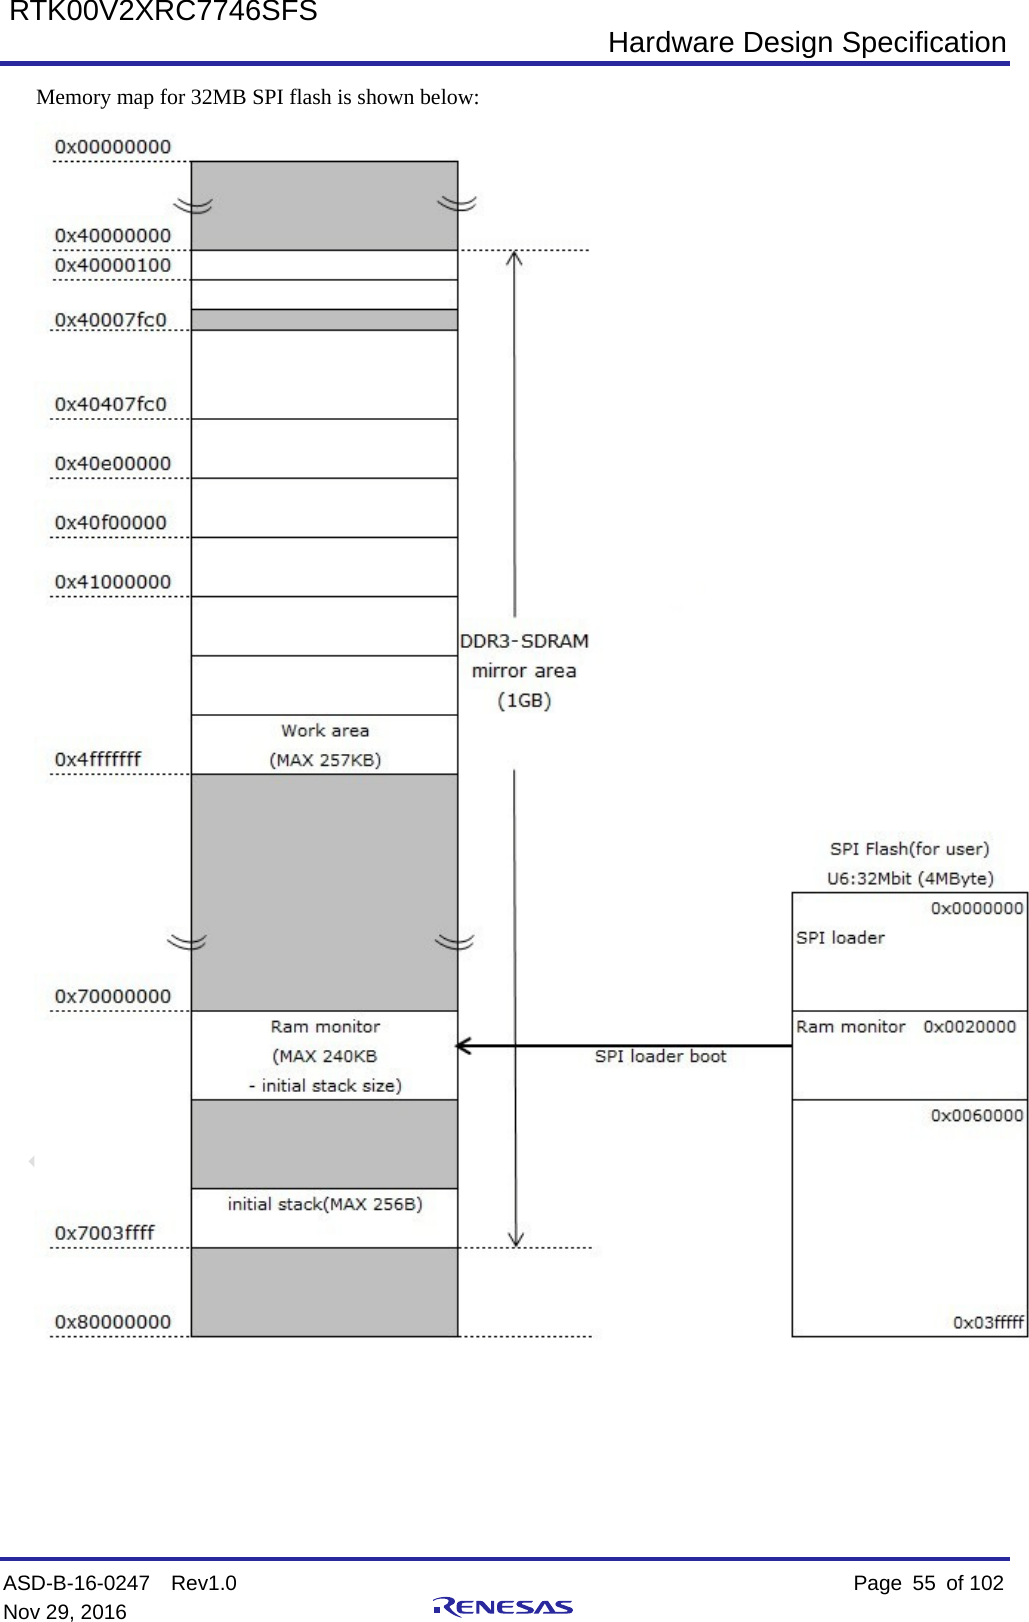  Hardware Design Specification ASD-B-16-0247  Rev1.0    Page  55 of 102 Nov 29, 2016     RTK00V2XRC7746SFS Memory map for 32MB SPI flash is shown below:       